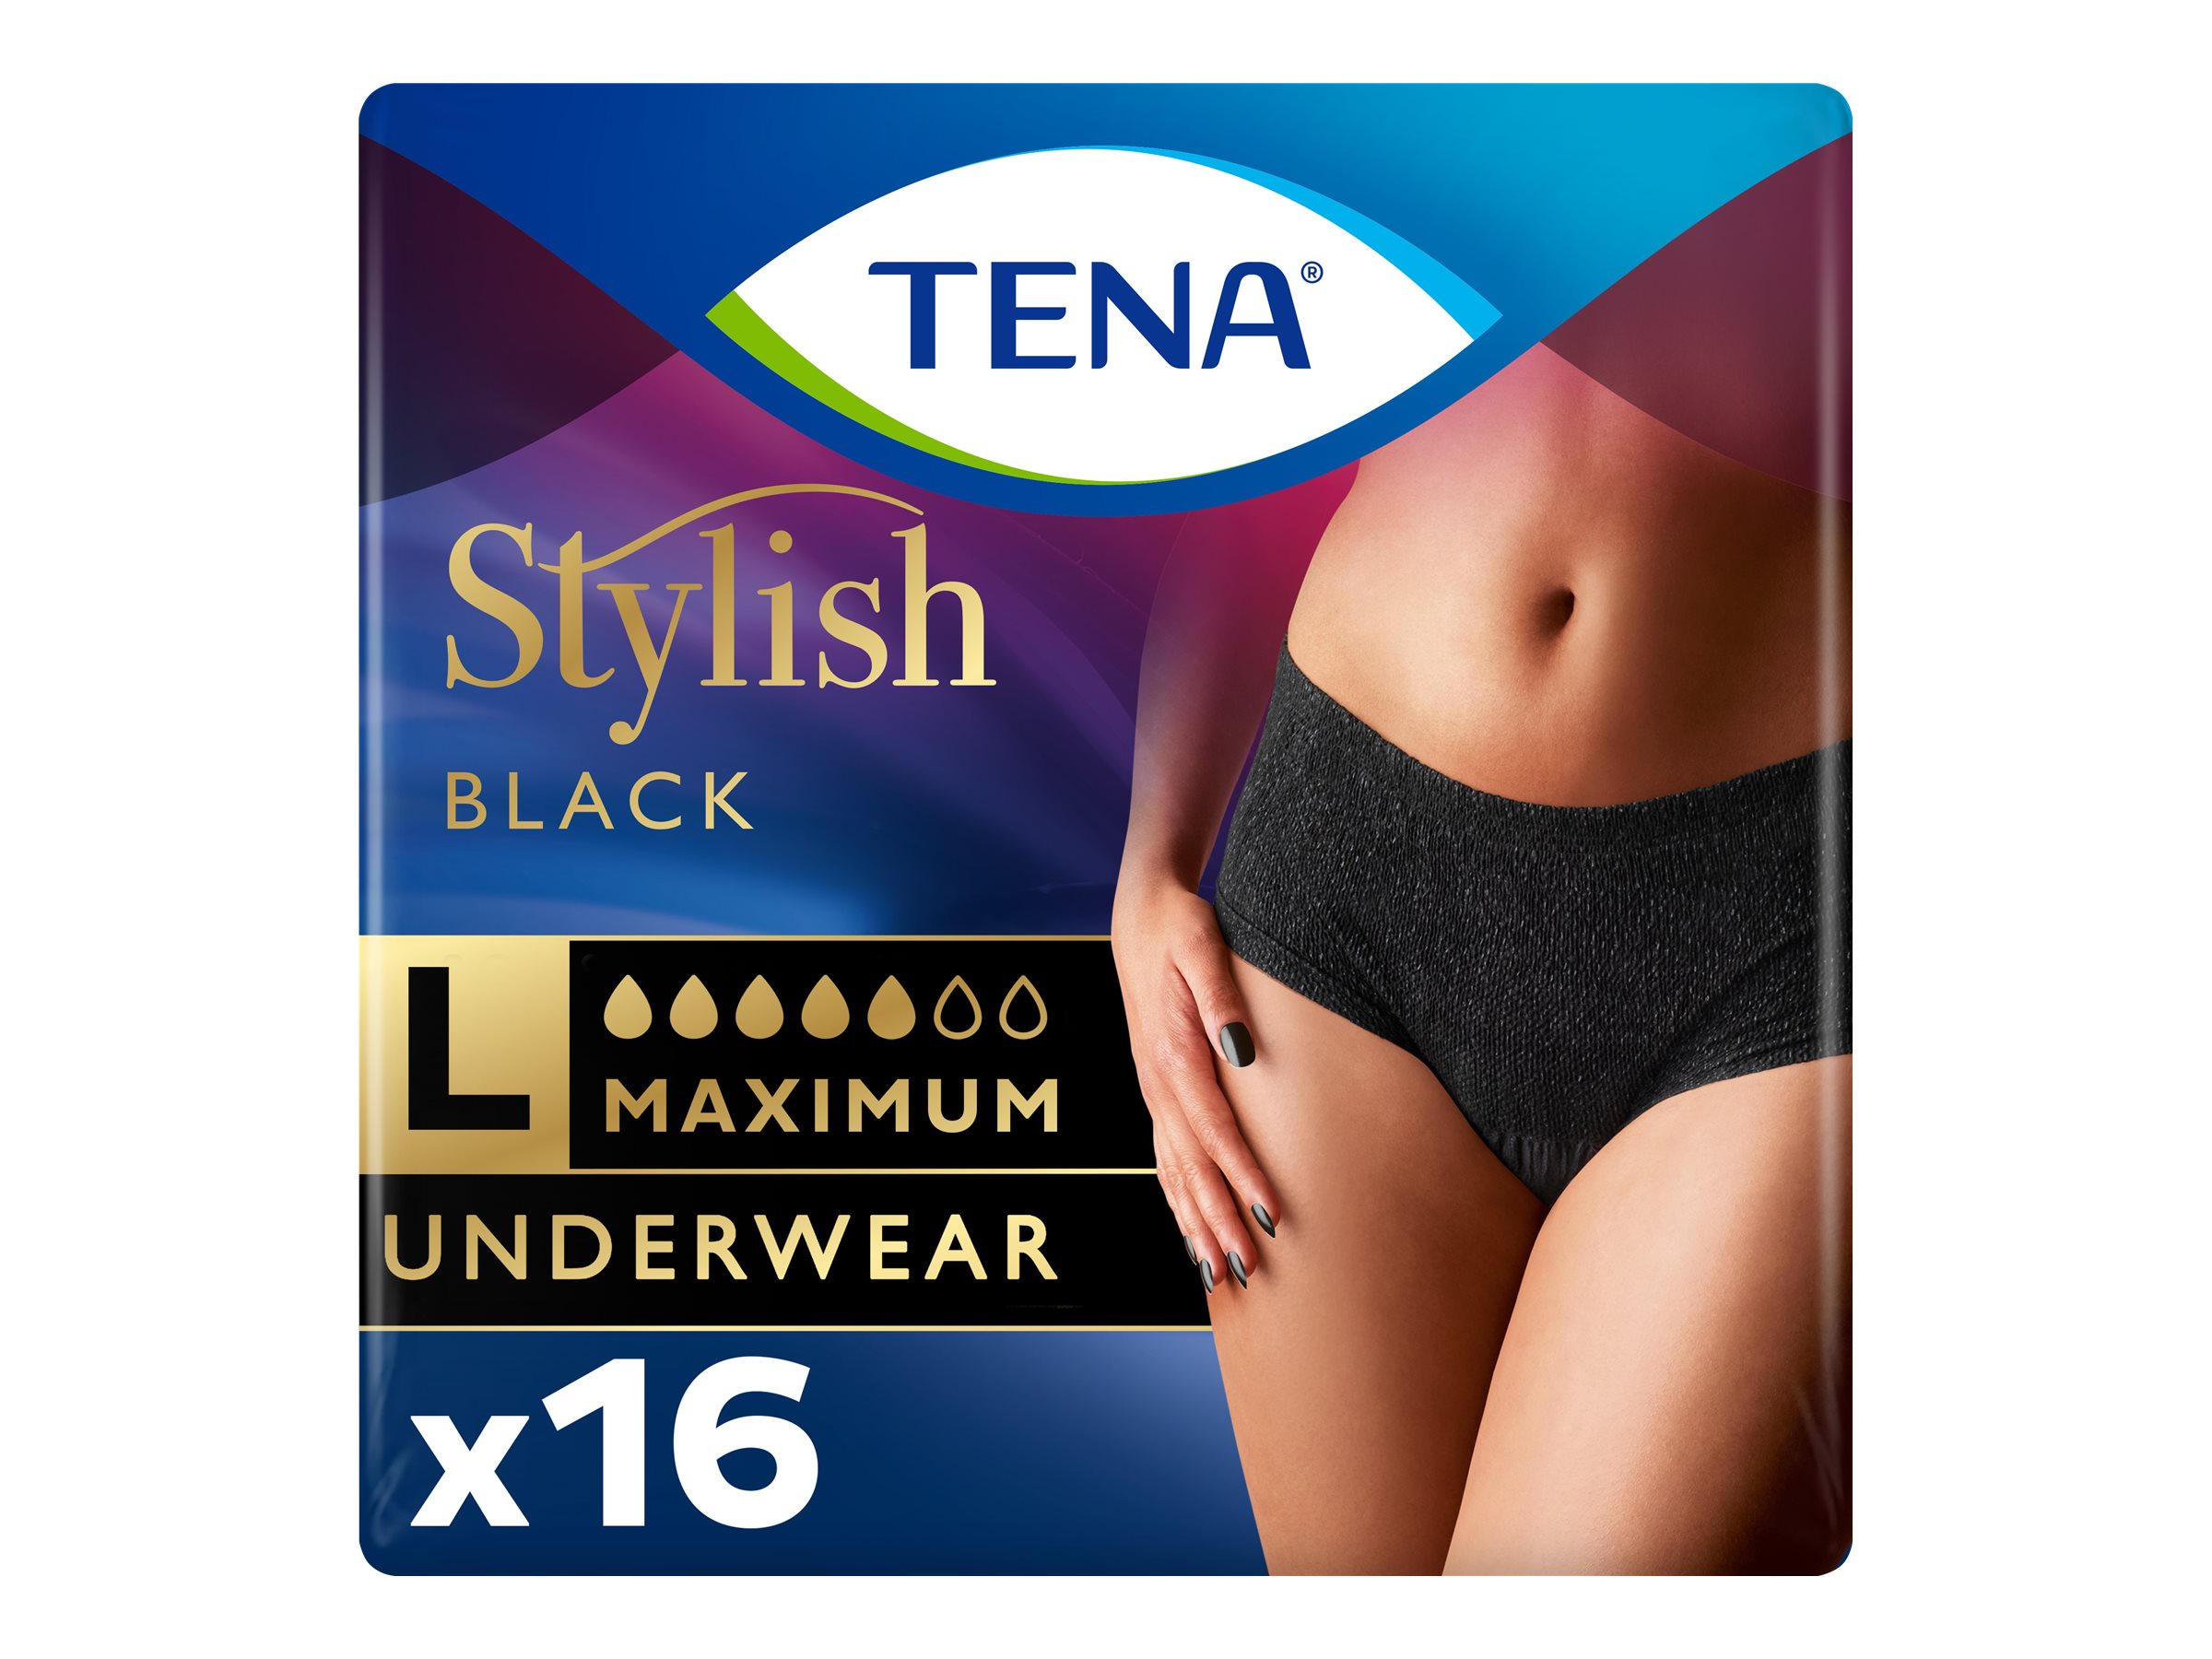 1-Pack Women's Nylon Incontinence Panties Black Medium (Fits Hip 38-40) 